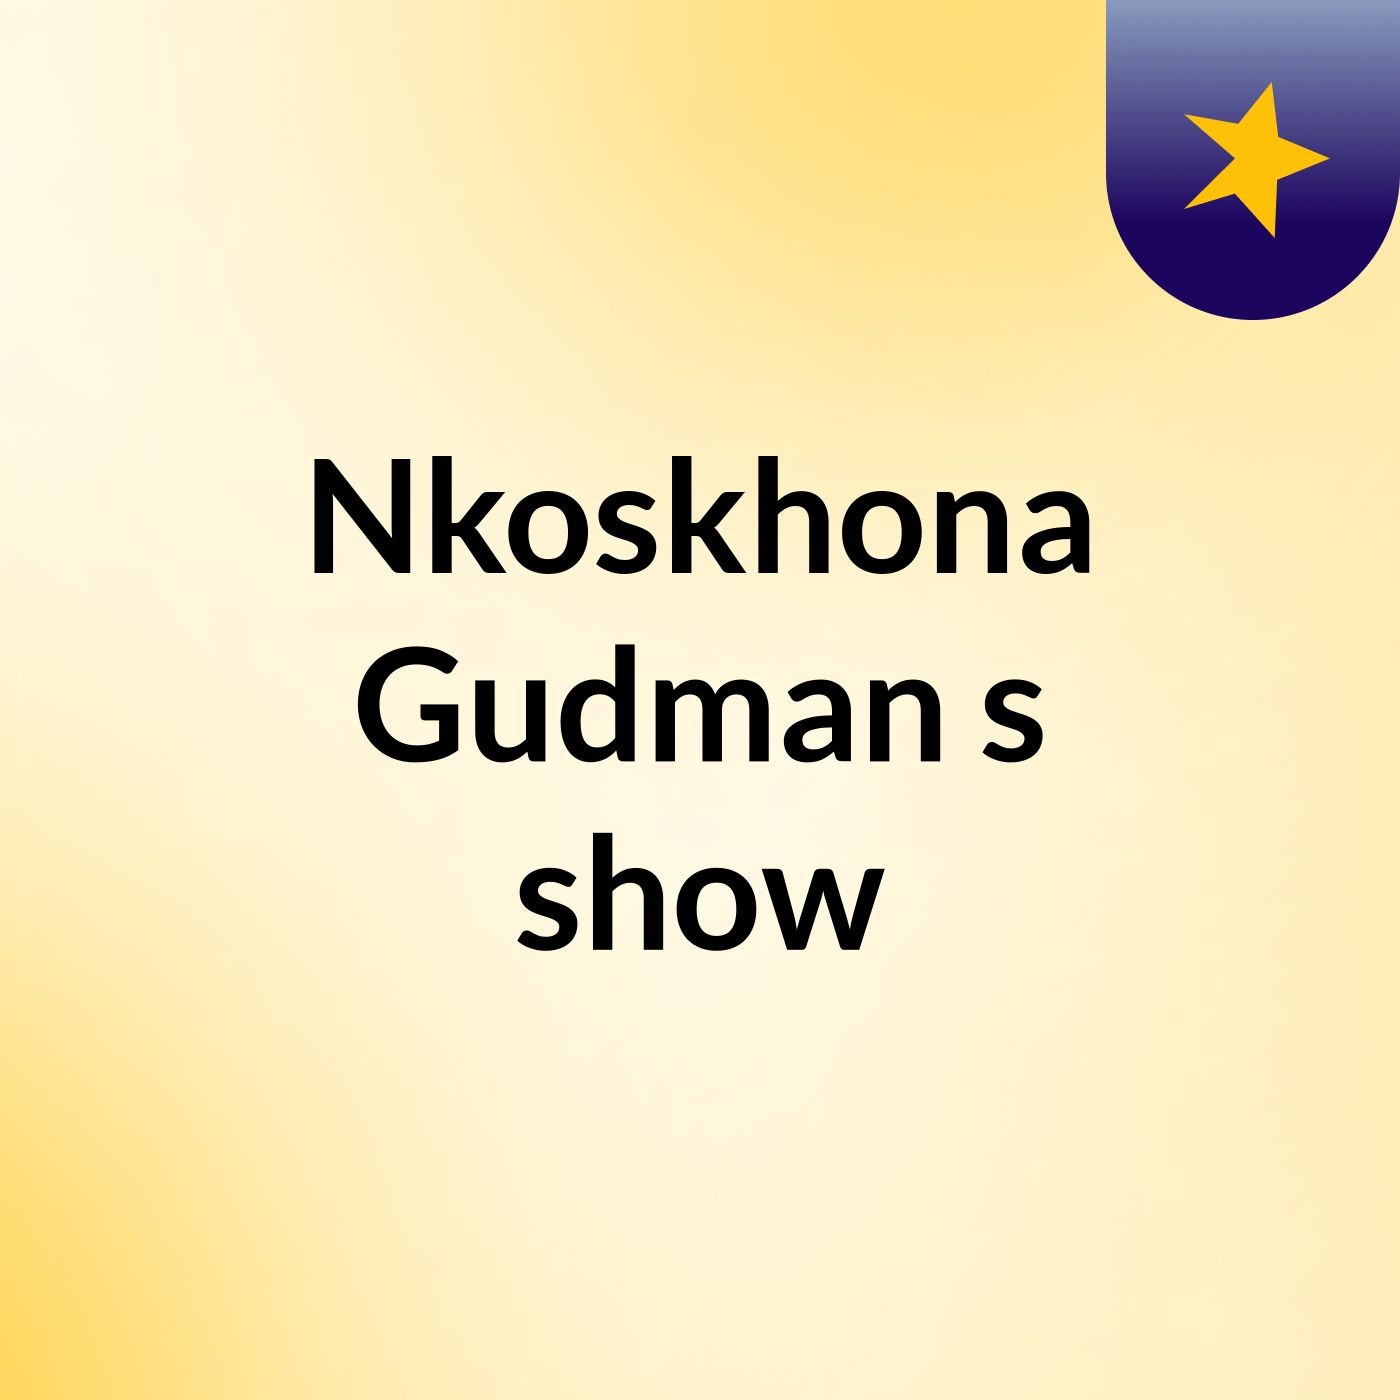 Episode 11 - Nkoskhona Gudman's show